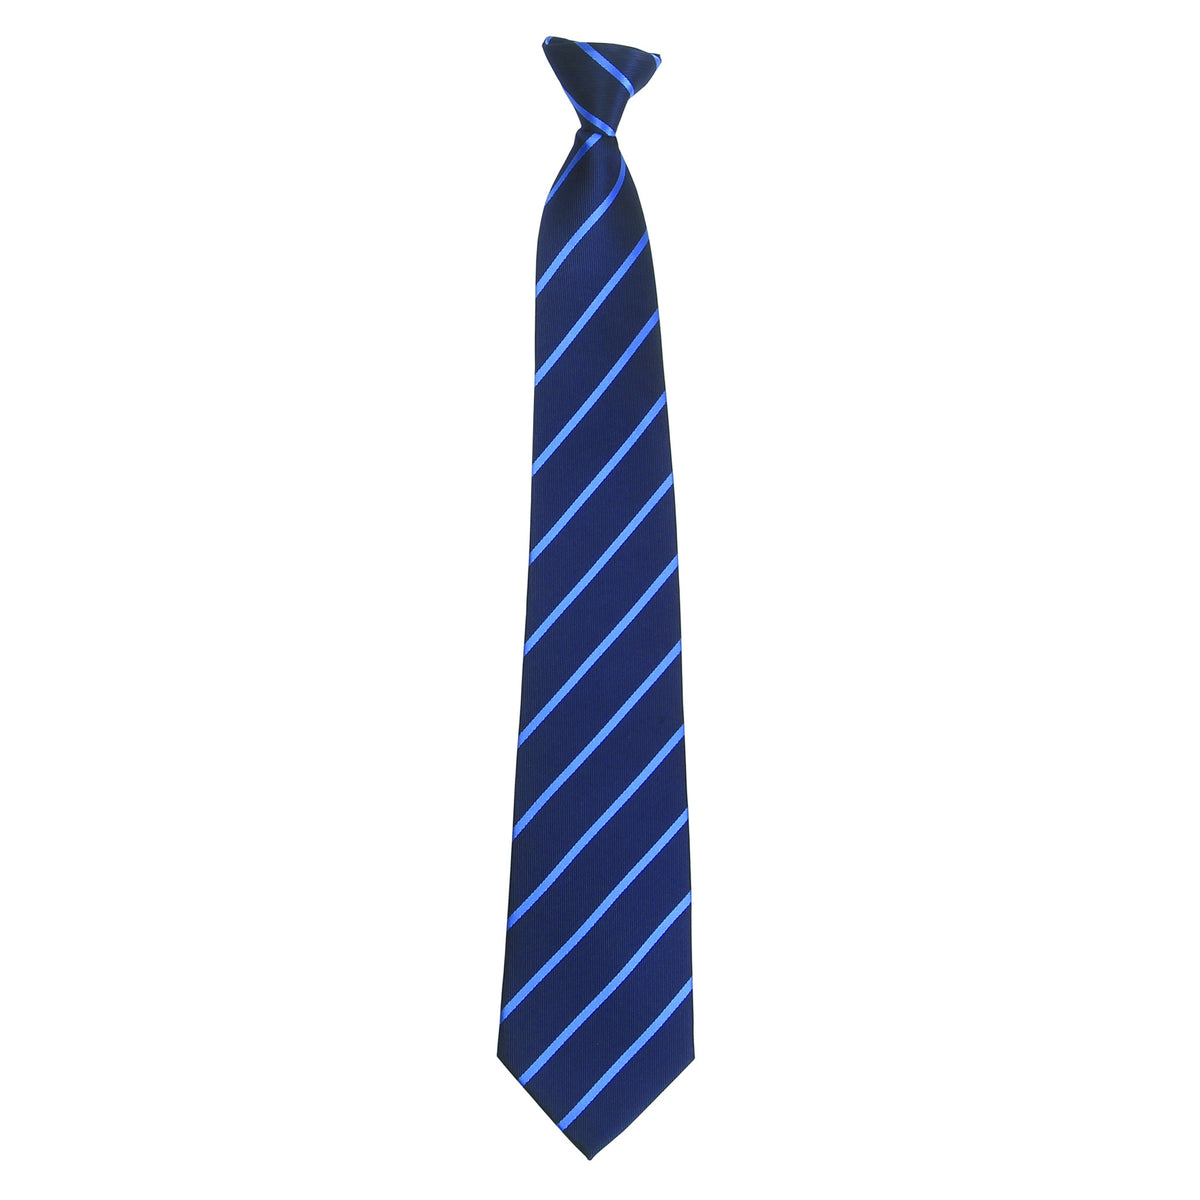 Premier Striped Ties - peterdrew.com
 - 3